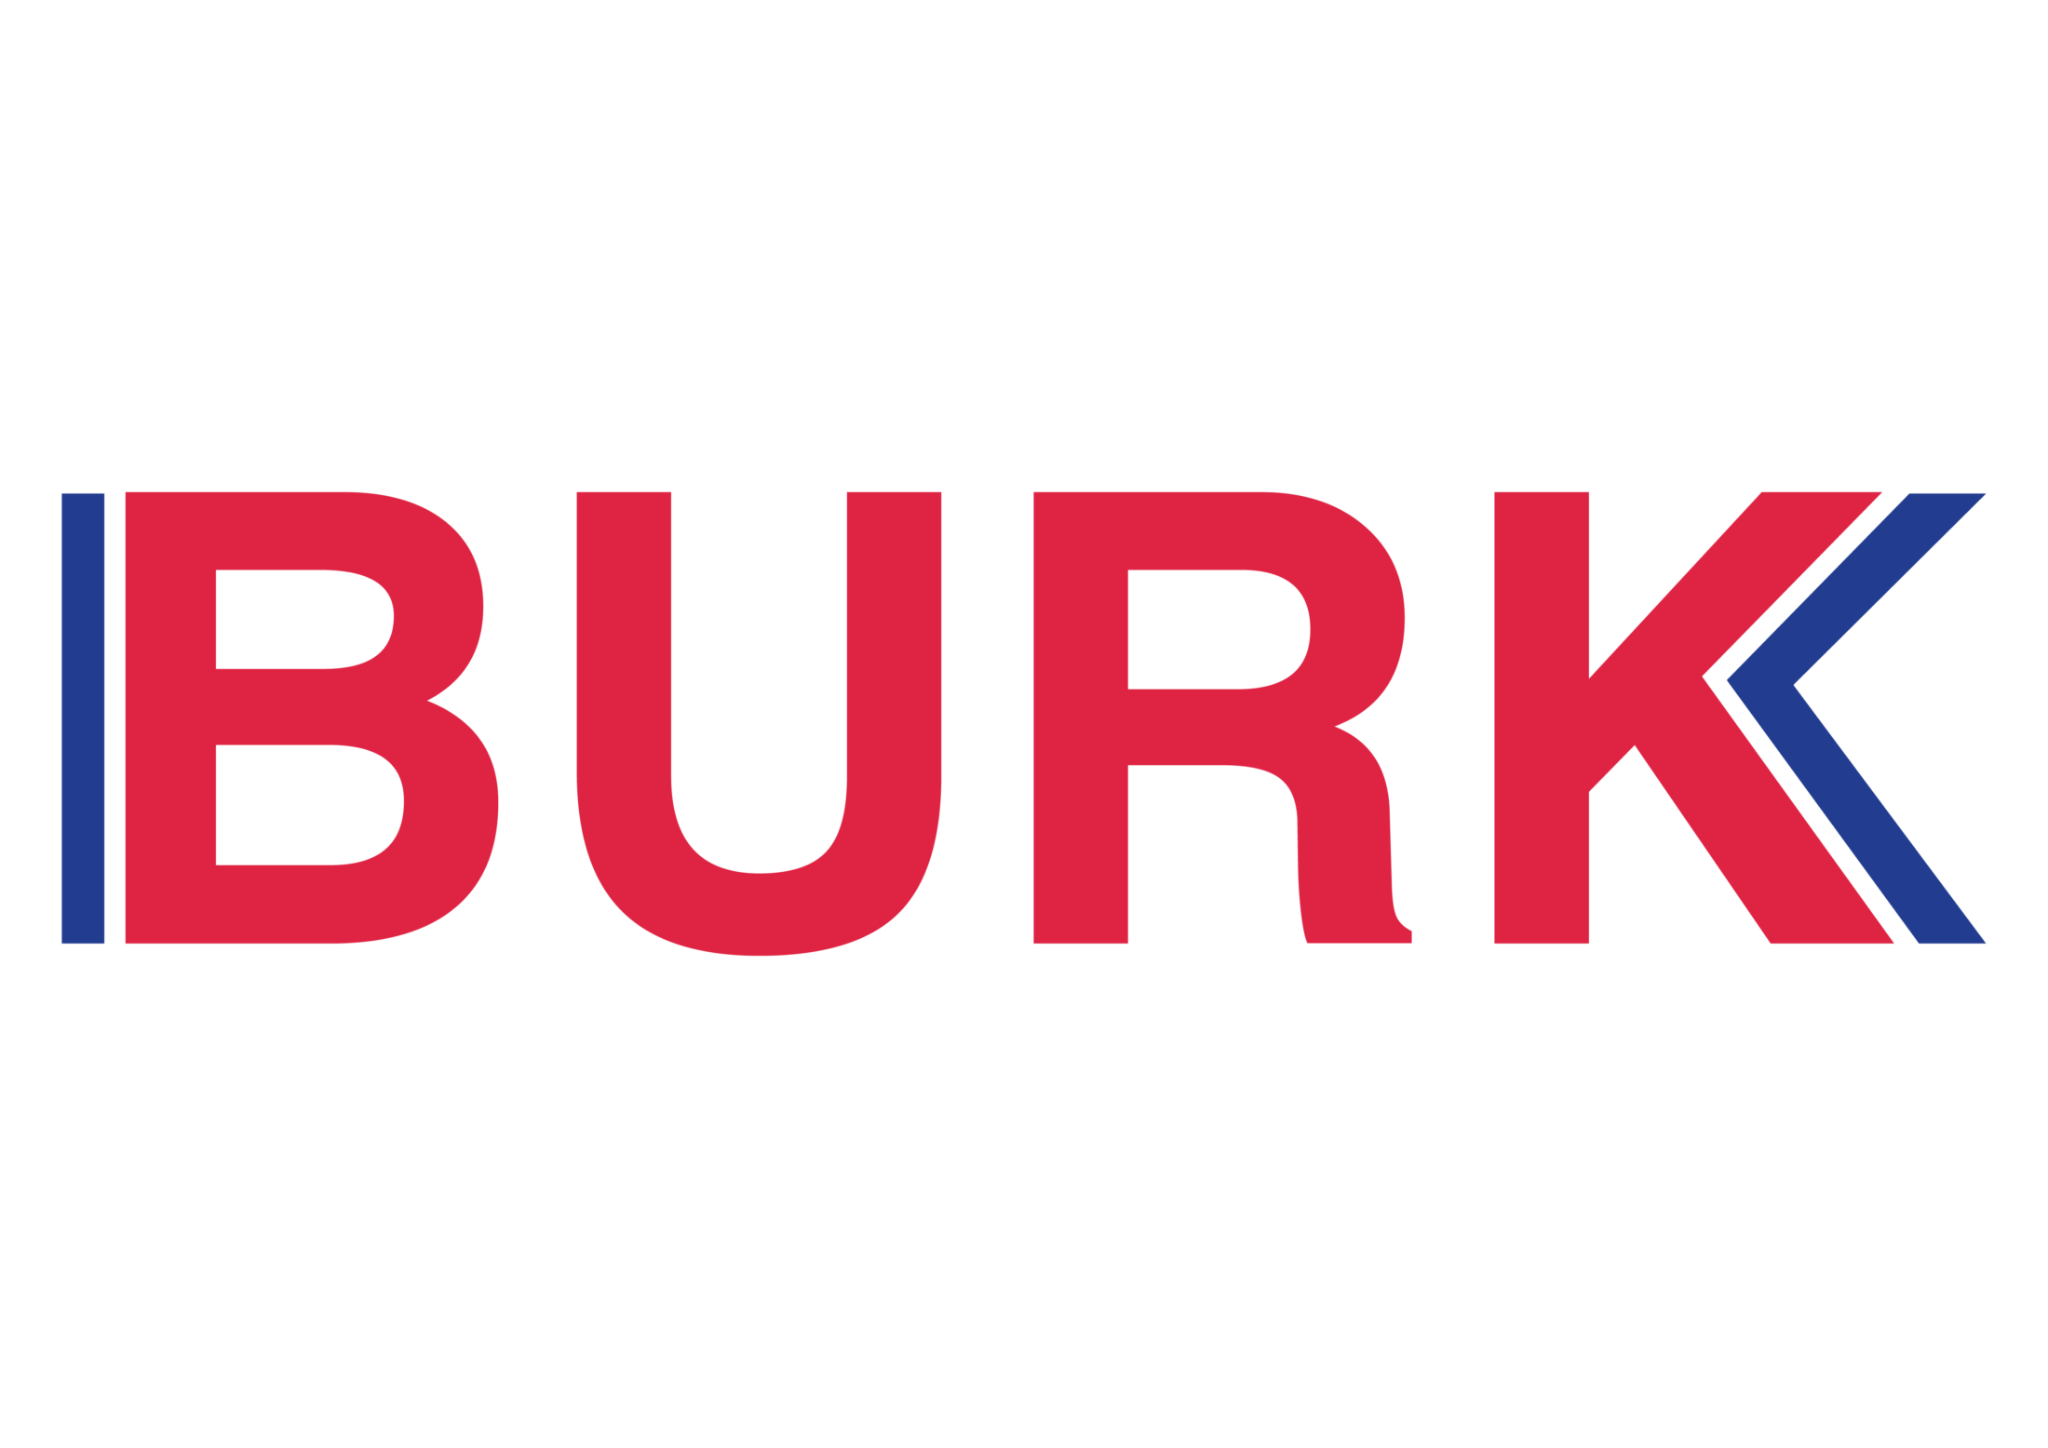 Erwin Burk GmbH & Co. KG